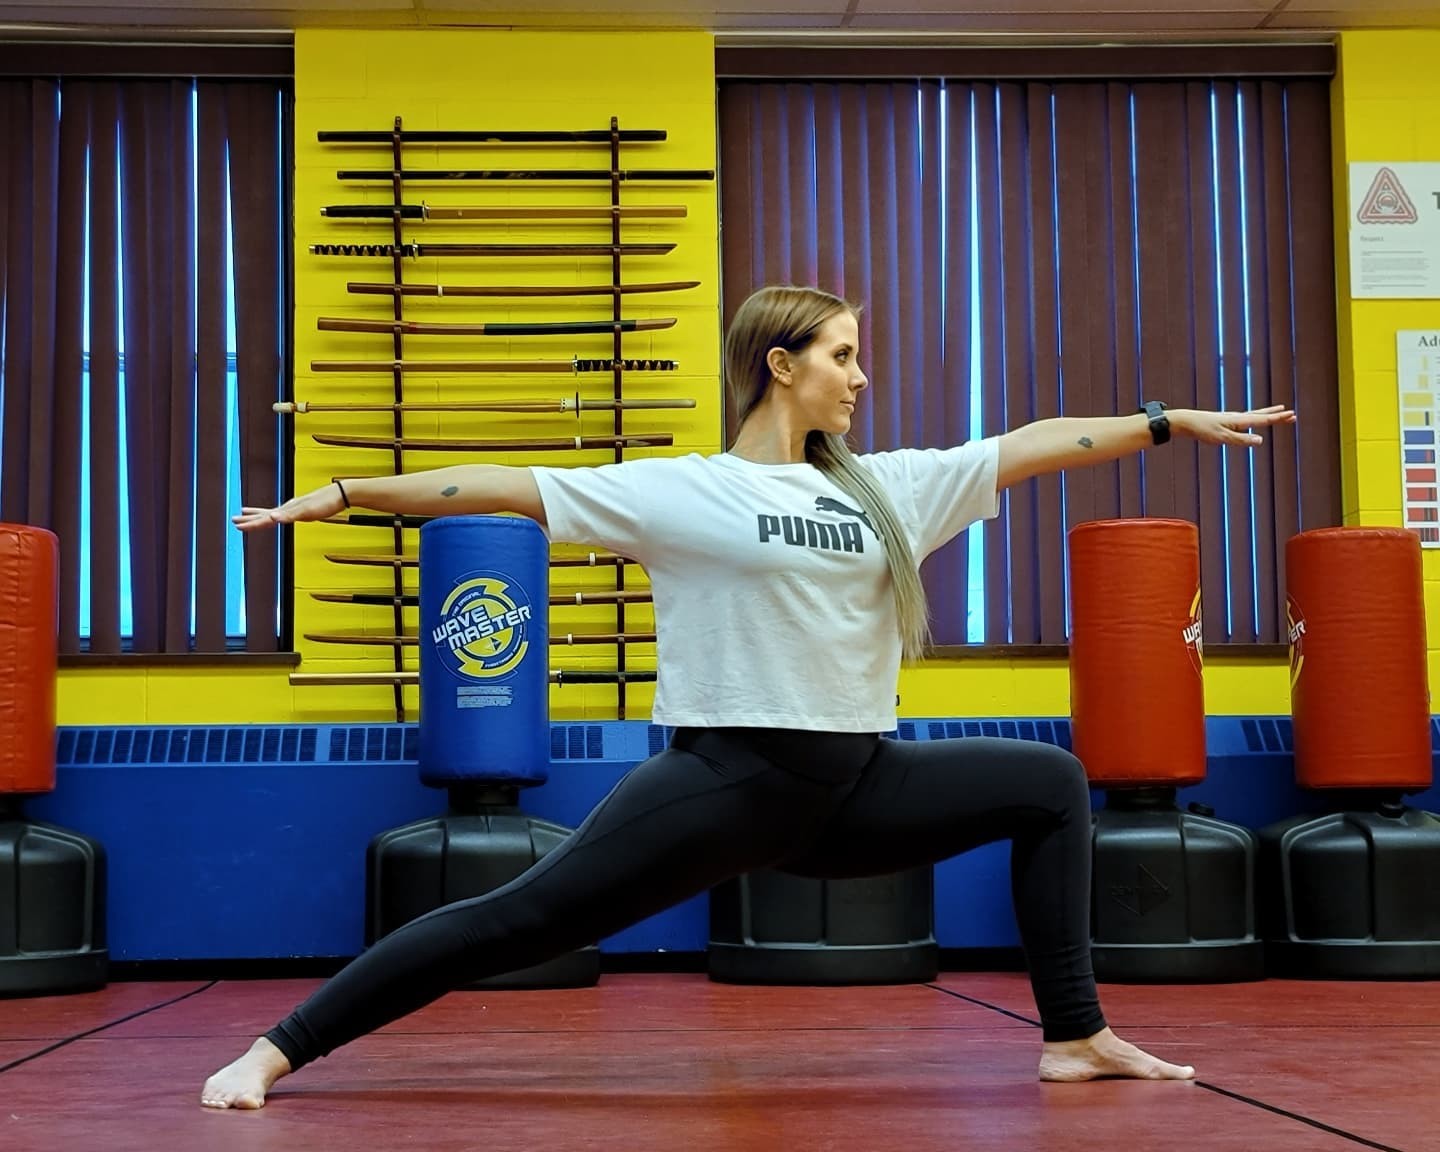 Femme en tenue de yoga PUMA en posture du guerrier